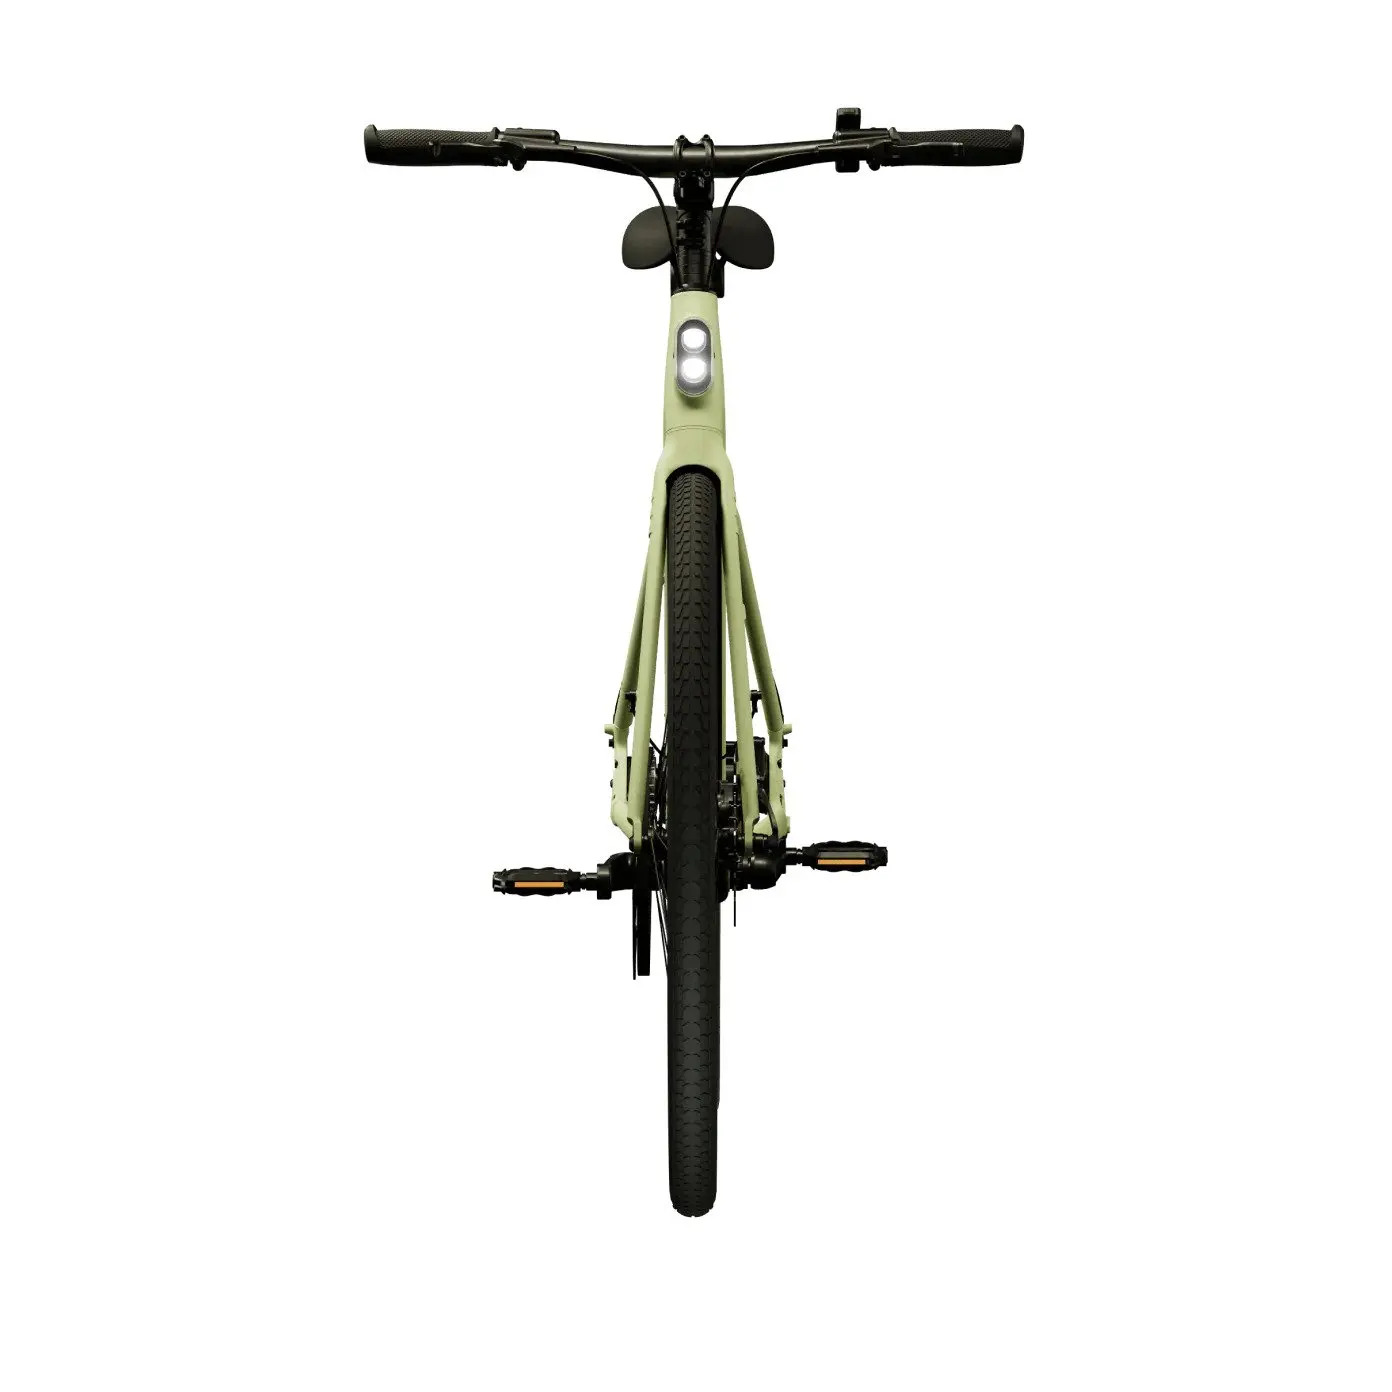 Tenways Electric Bike Urban Design Lightweight 16kg CGO600 PRO M Green